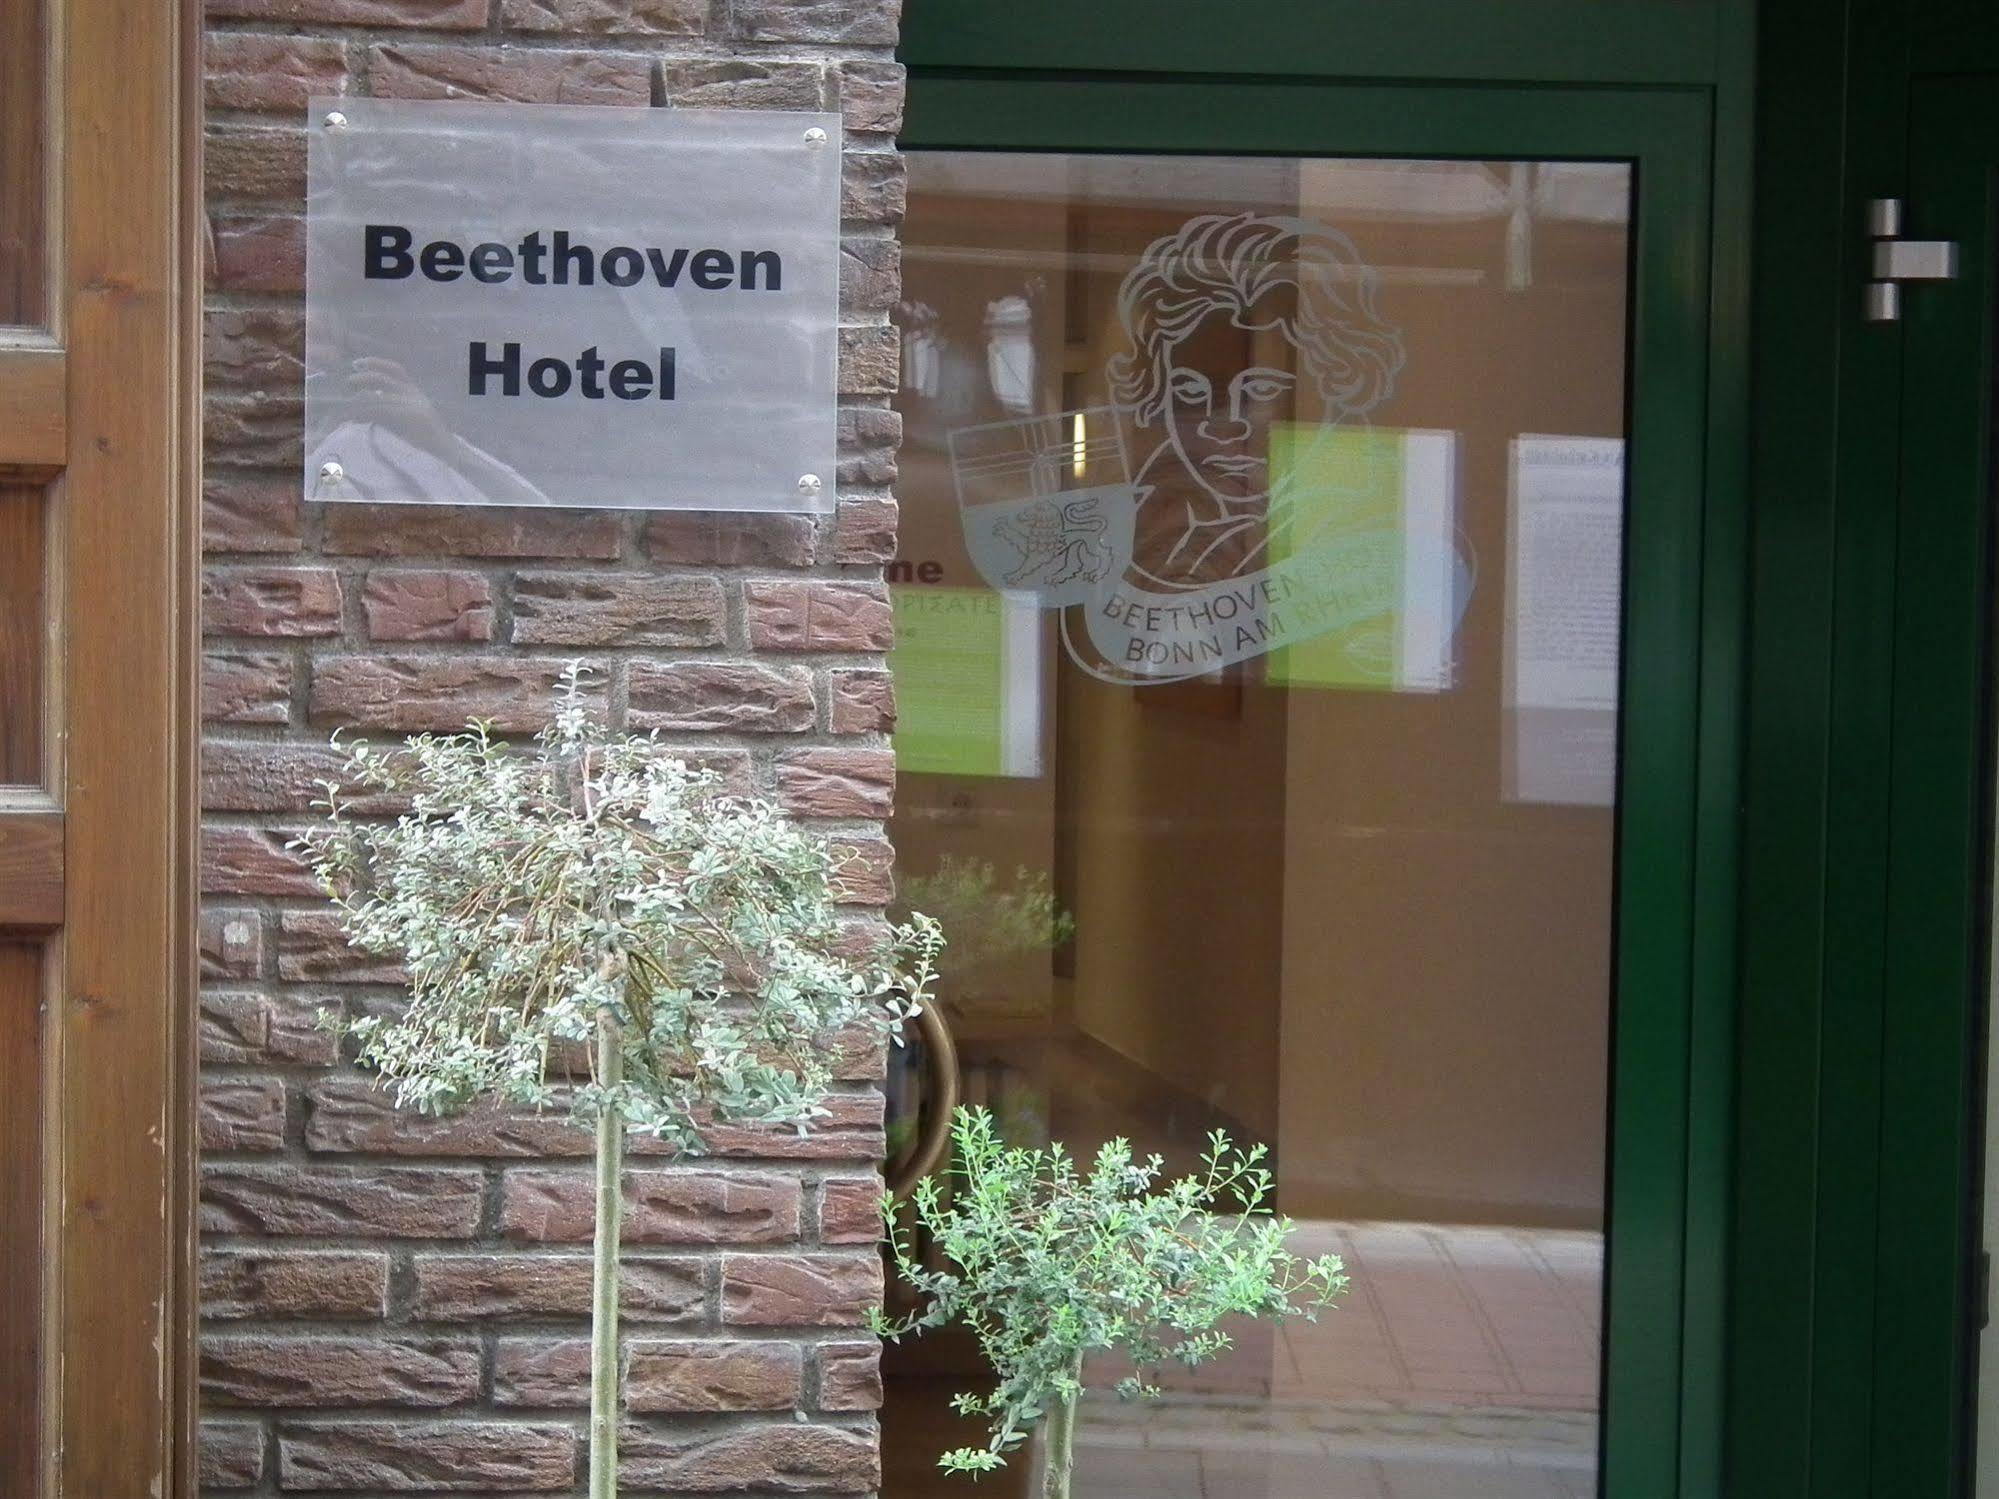 Beethoven Hotel Dreesen - Furnished By Boconcept Bonn Exterior photo